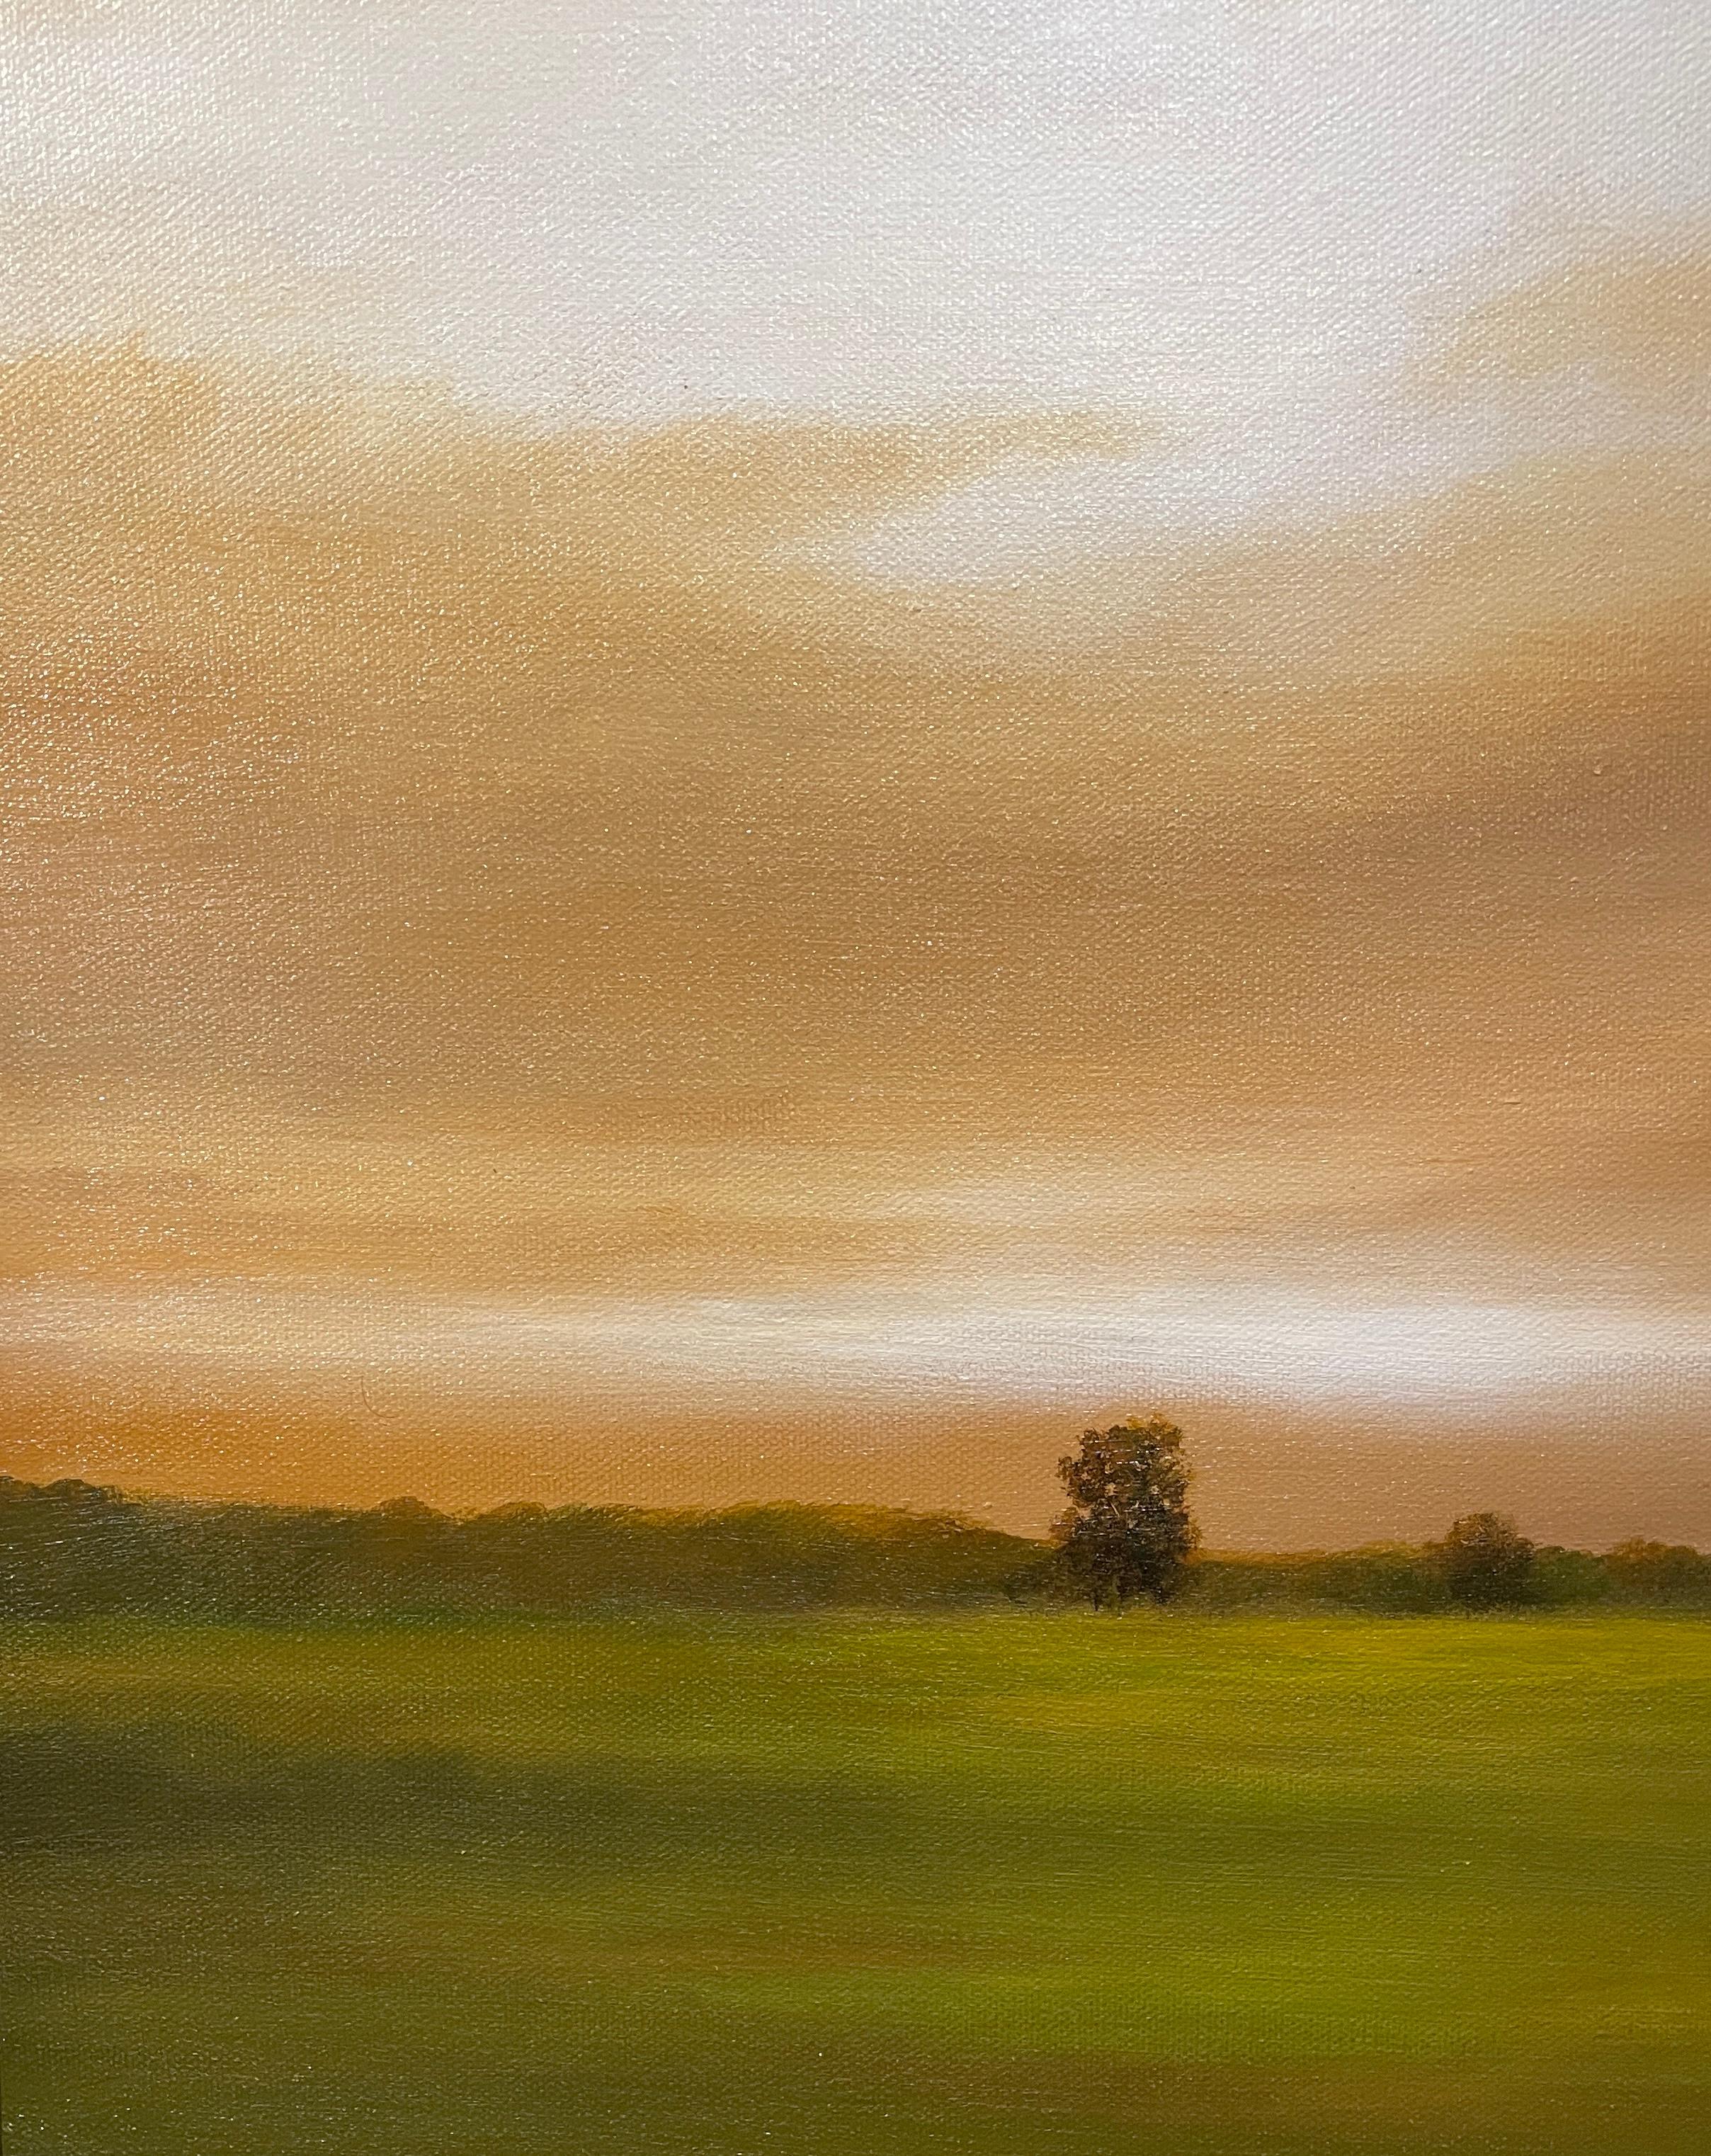 Building Clouds, Quiet Pond - Original Oil Painting, Dramatic Sunset, Landscape - Gray Landscape Painting by Ahzad Bogosian